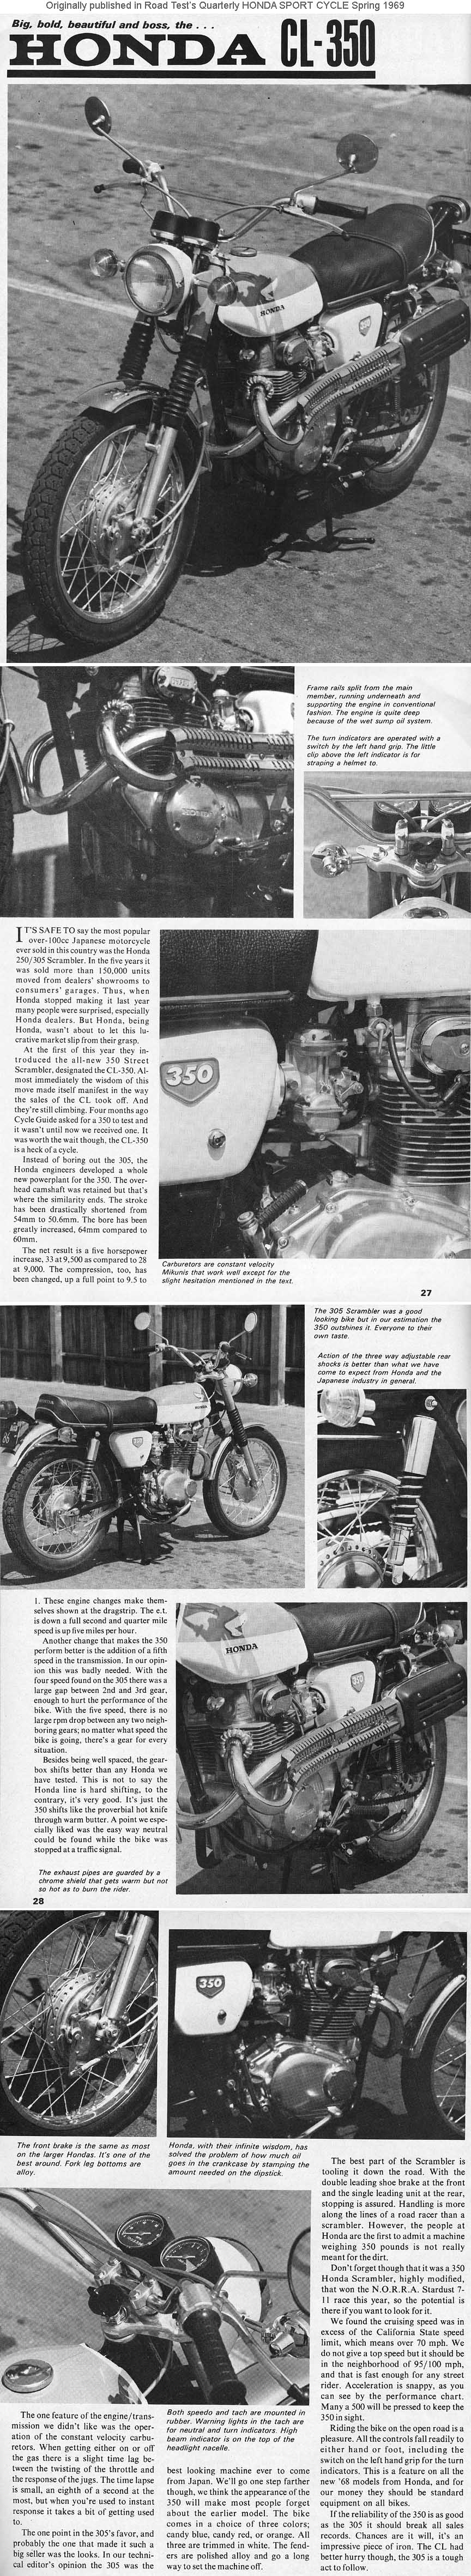 1969 Honda Sport Cycle text